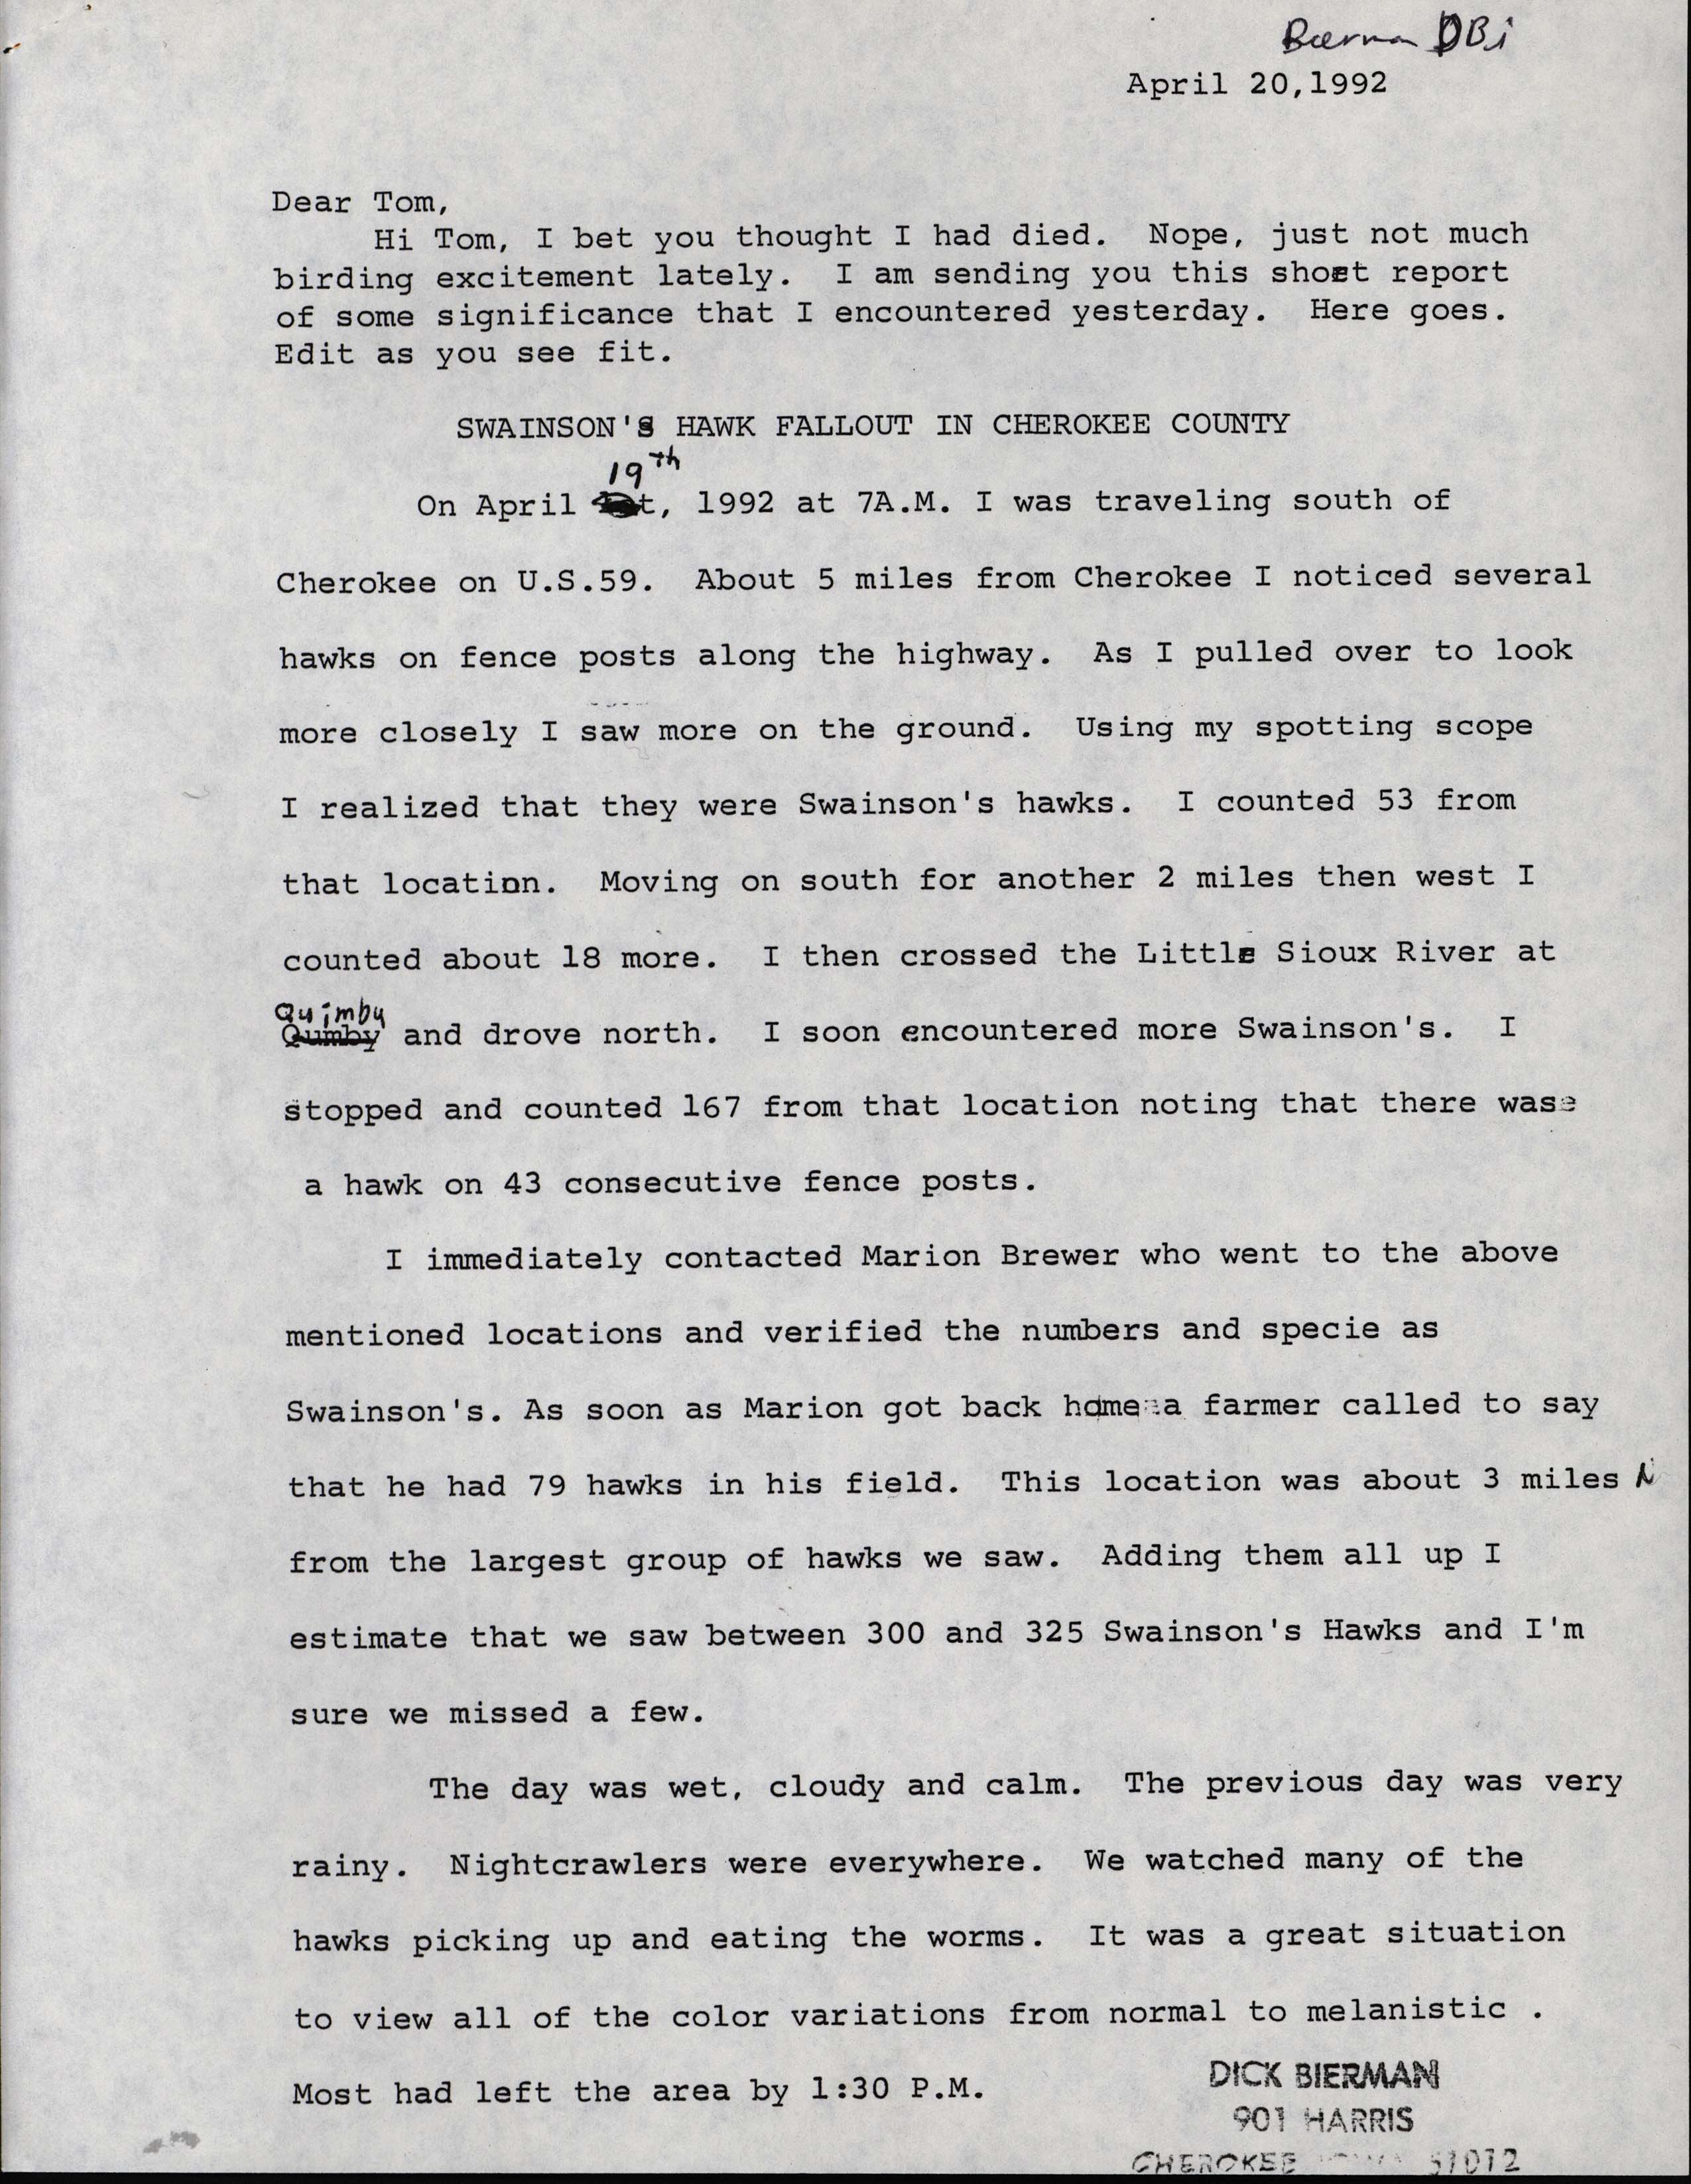 Dick Bierman letter to Thomas H. Kent regarding Swainson's Hawk sightings, April 20, 1992